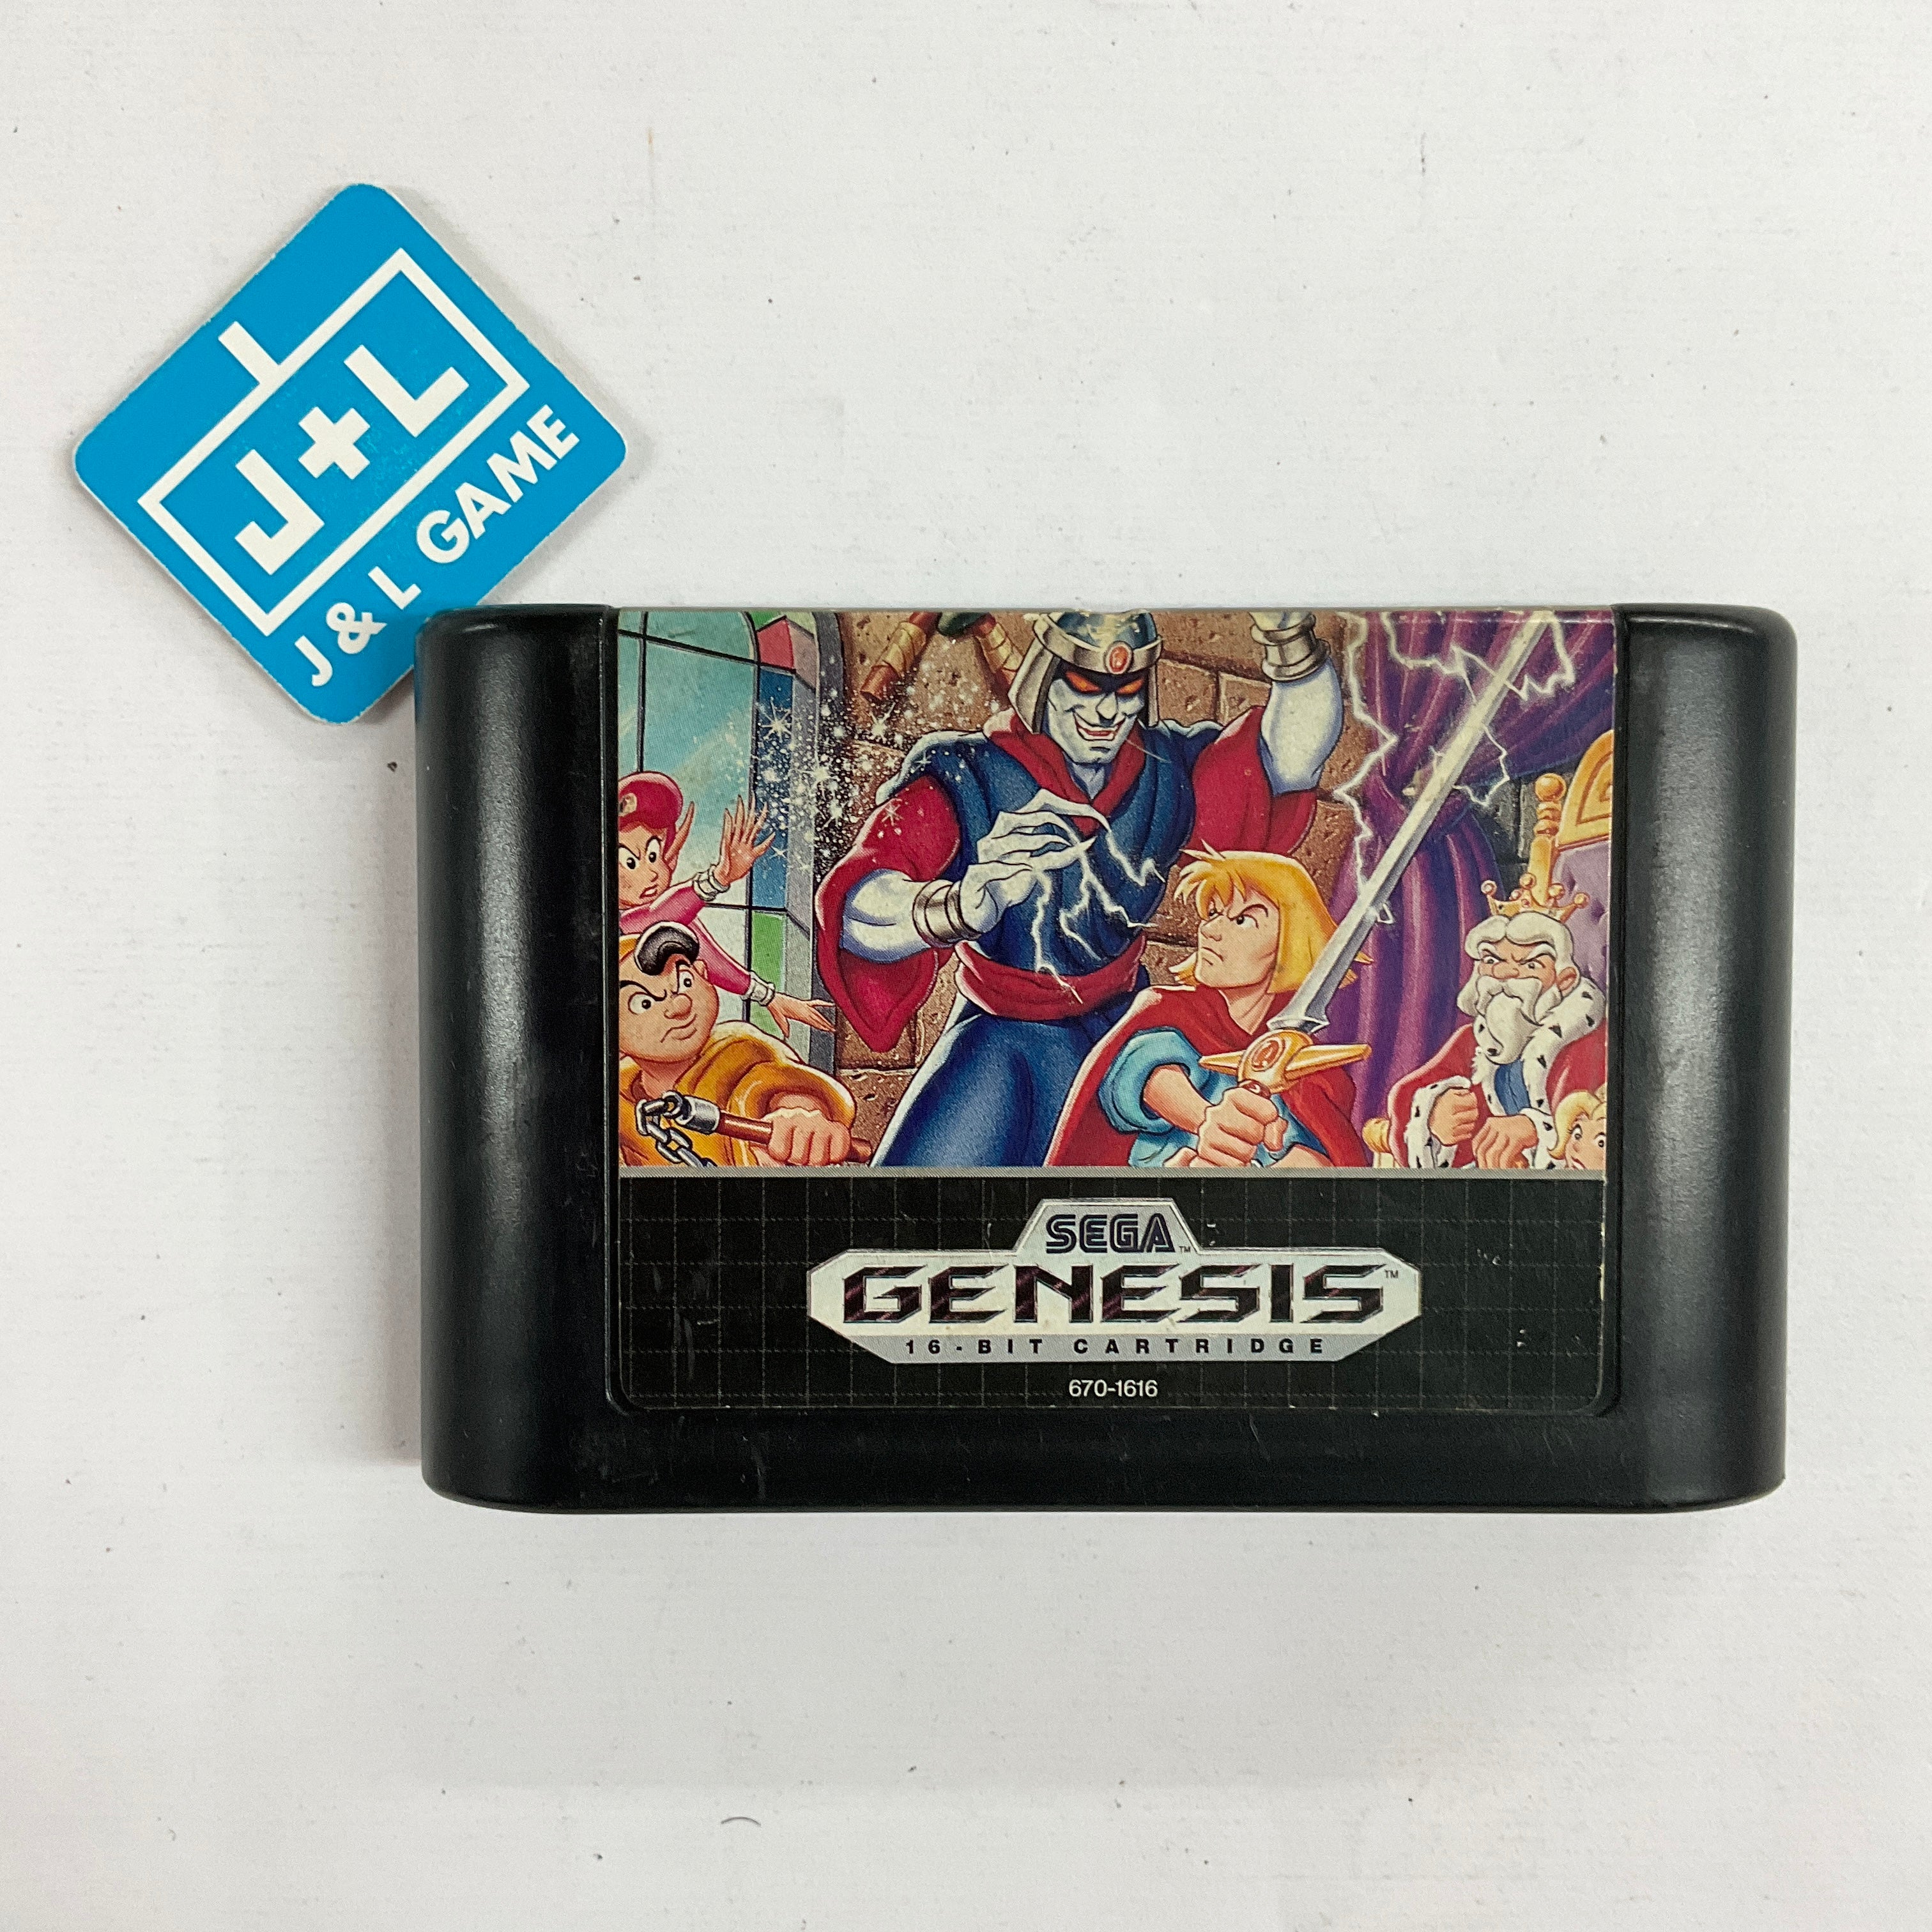 Shining in The Darkness - (SG) Sega Genesis [Pre-Owned] Video Games SEGA   